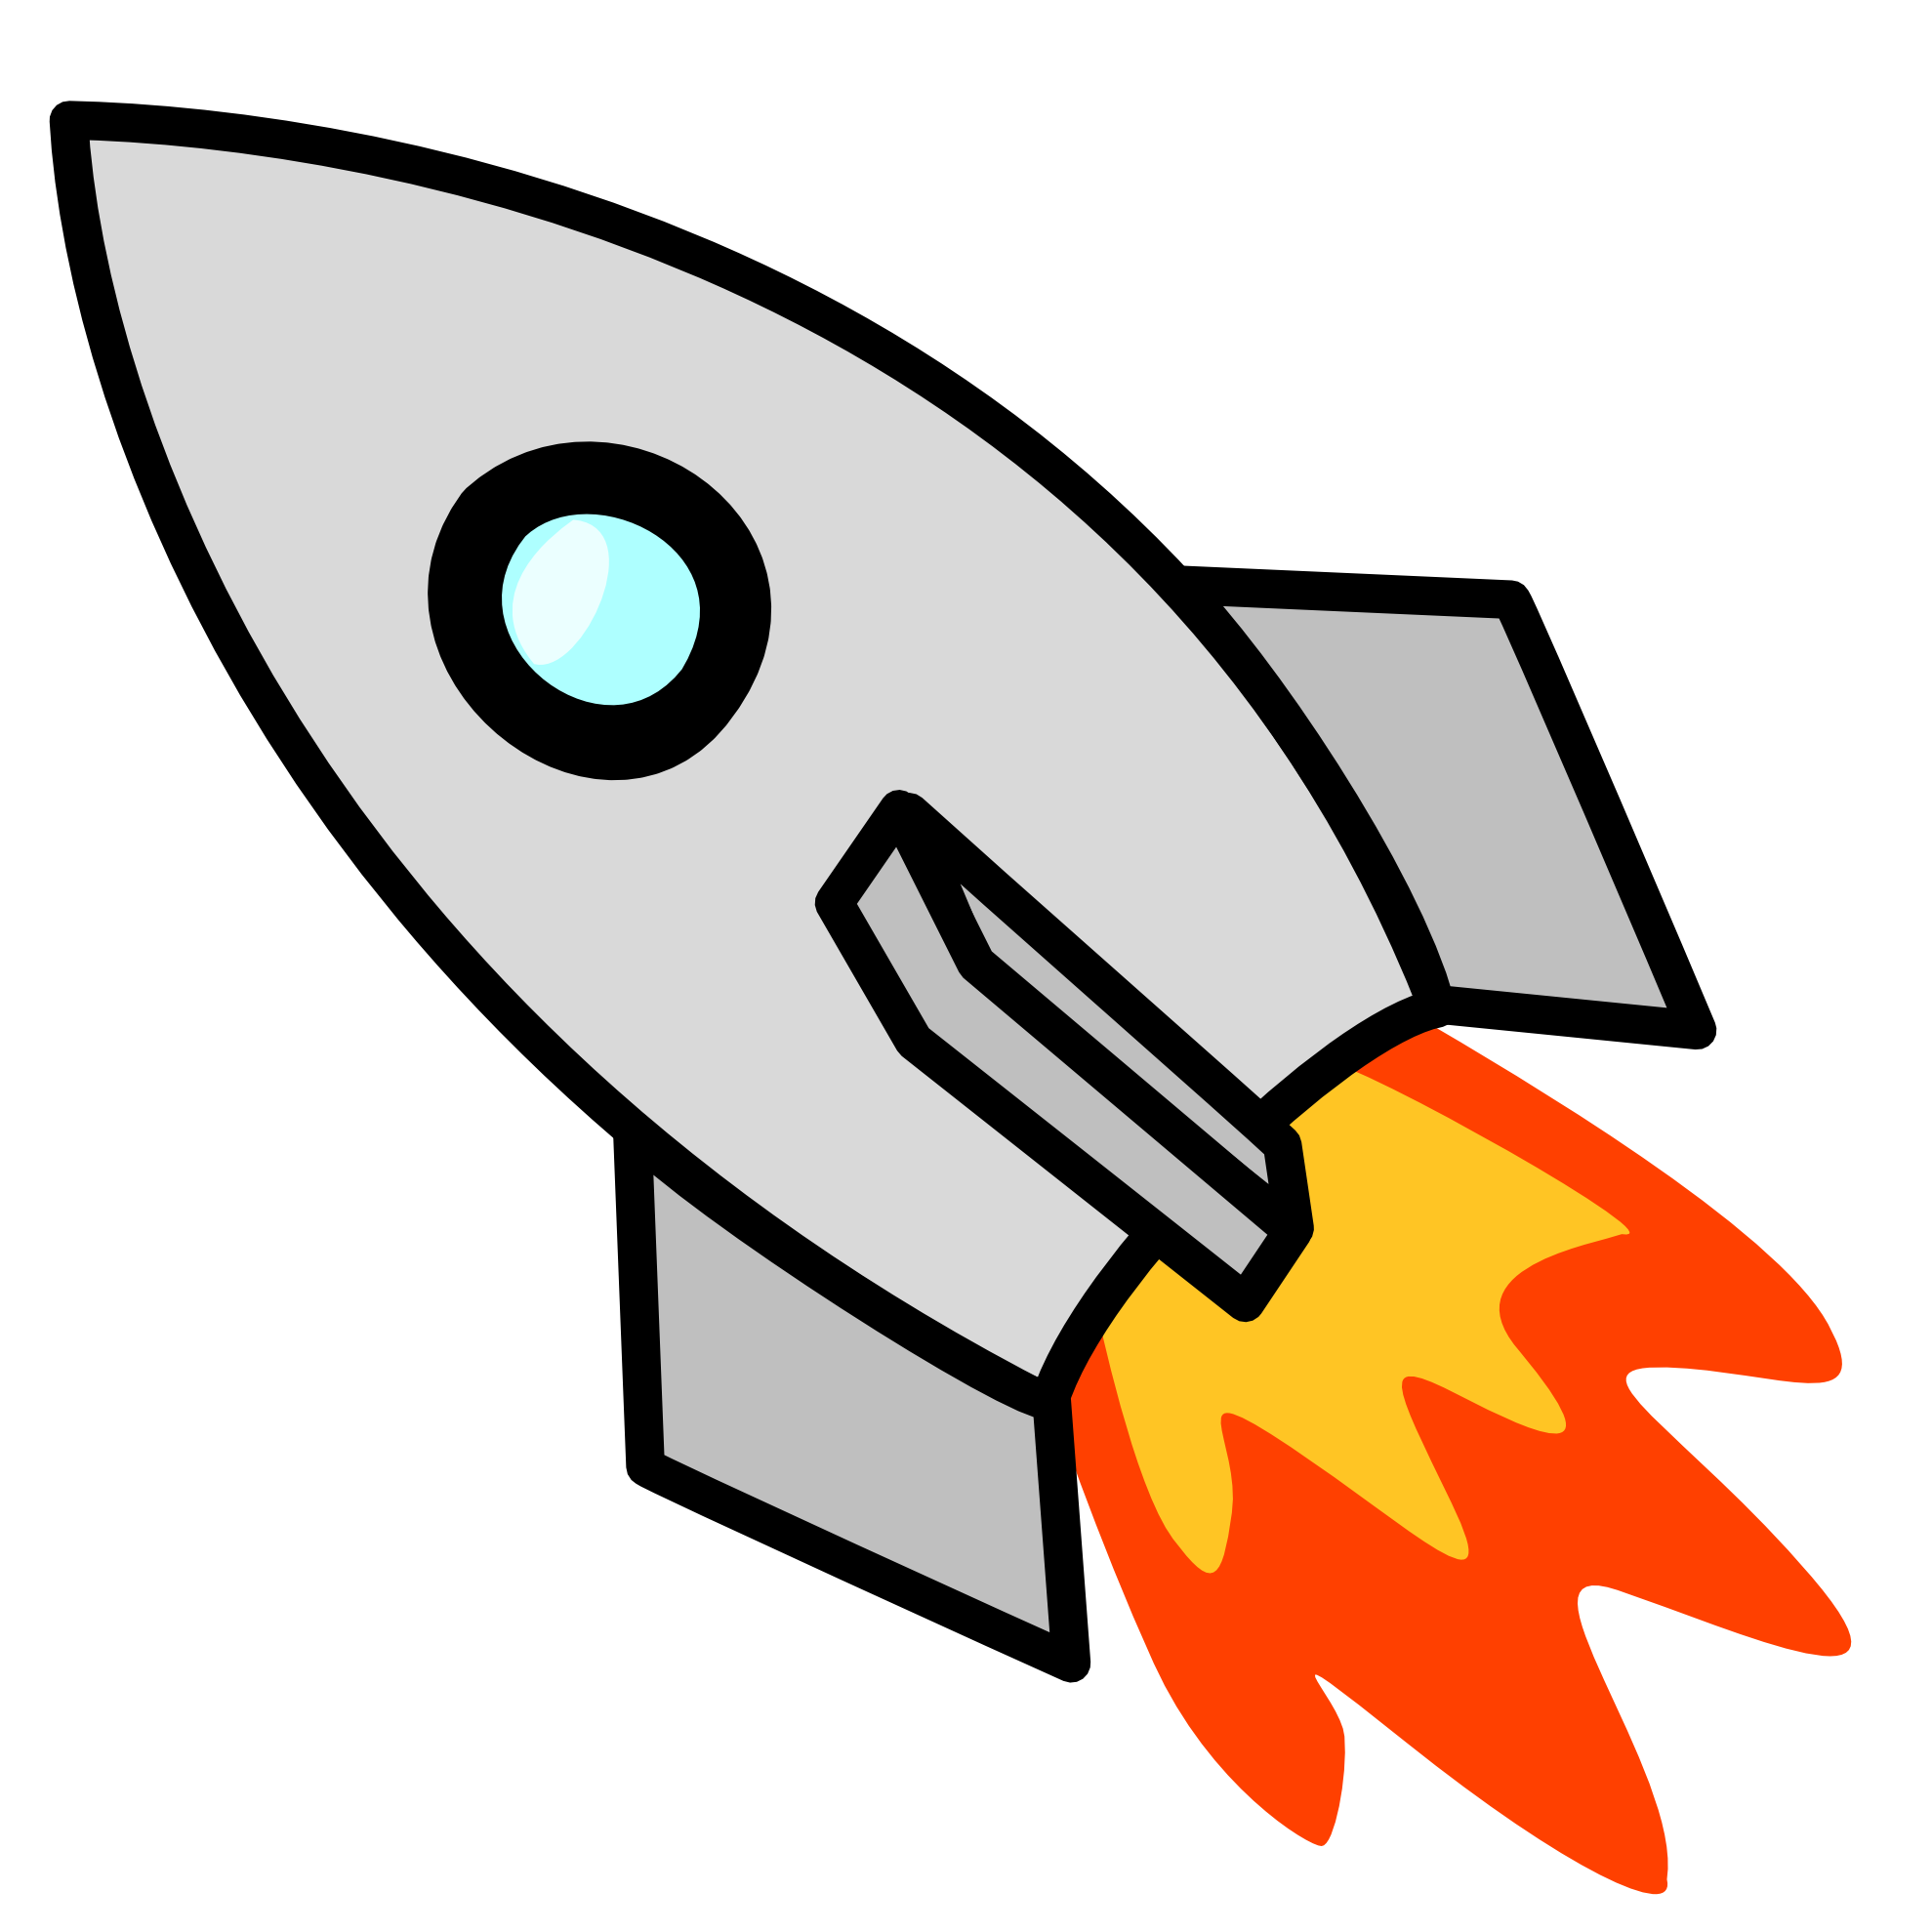 Rocket Clip Art - Clipart library